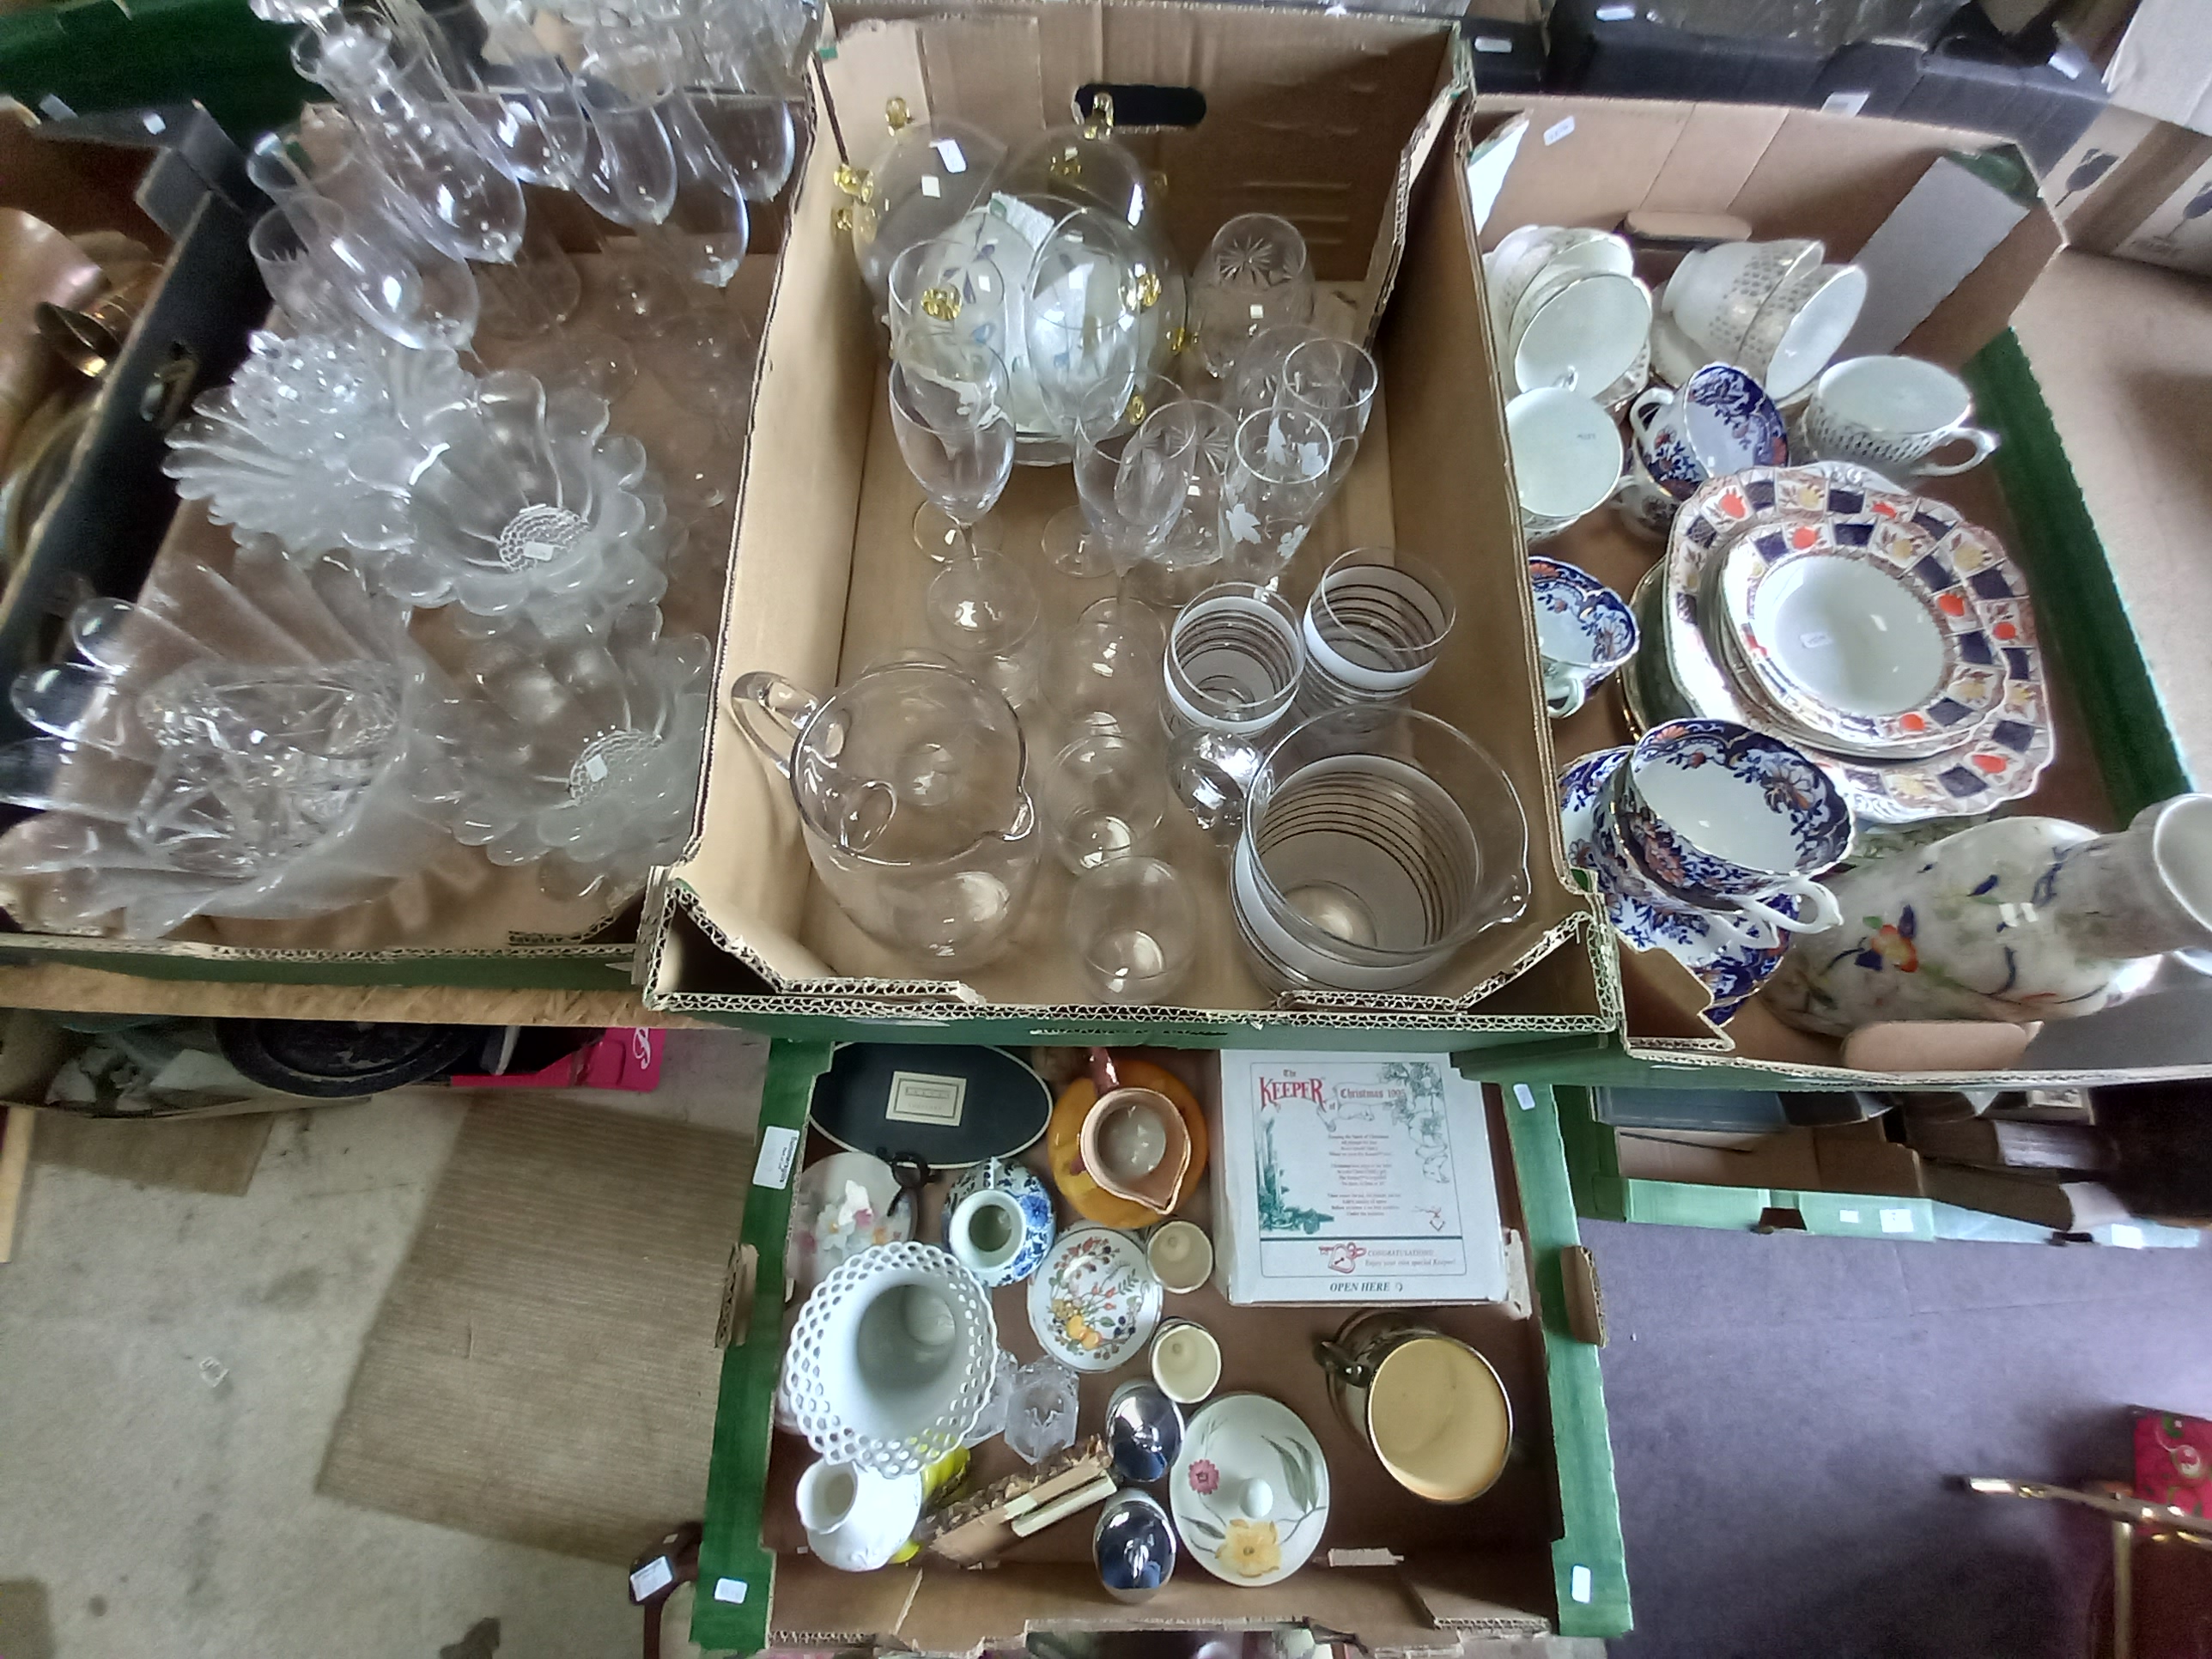 4 x boxes glass vases, retro glassware, tea sets, plates etc